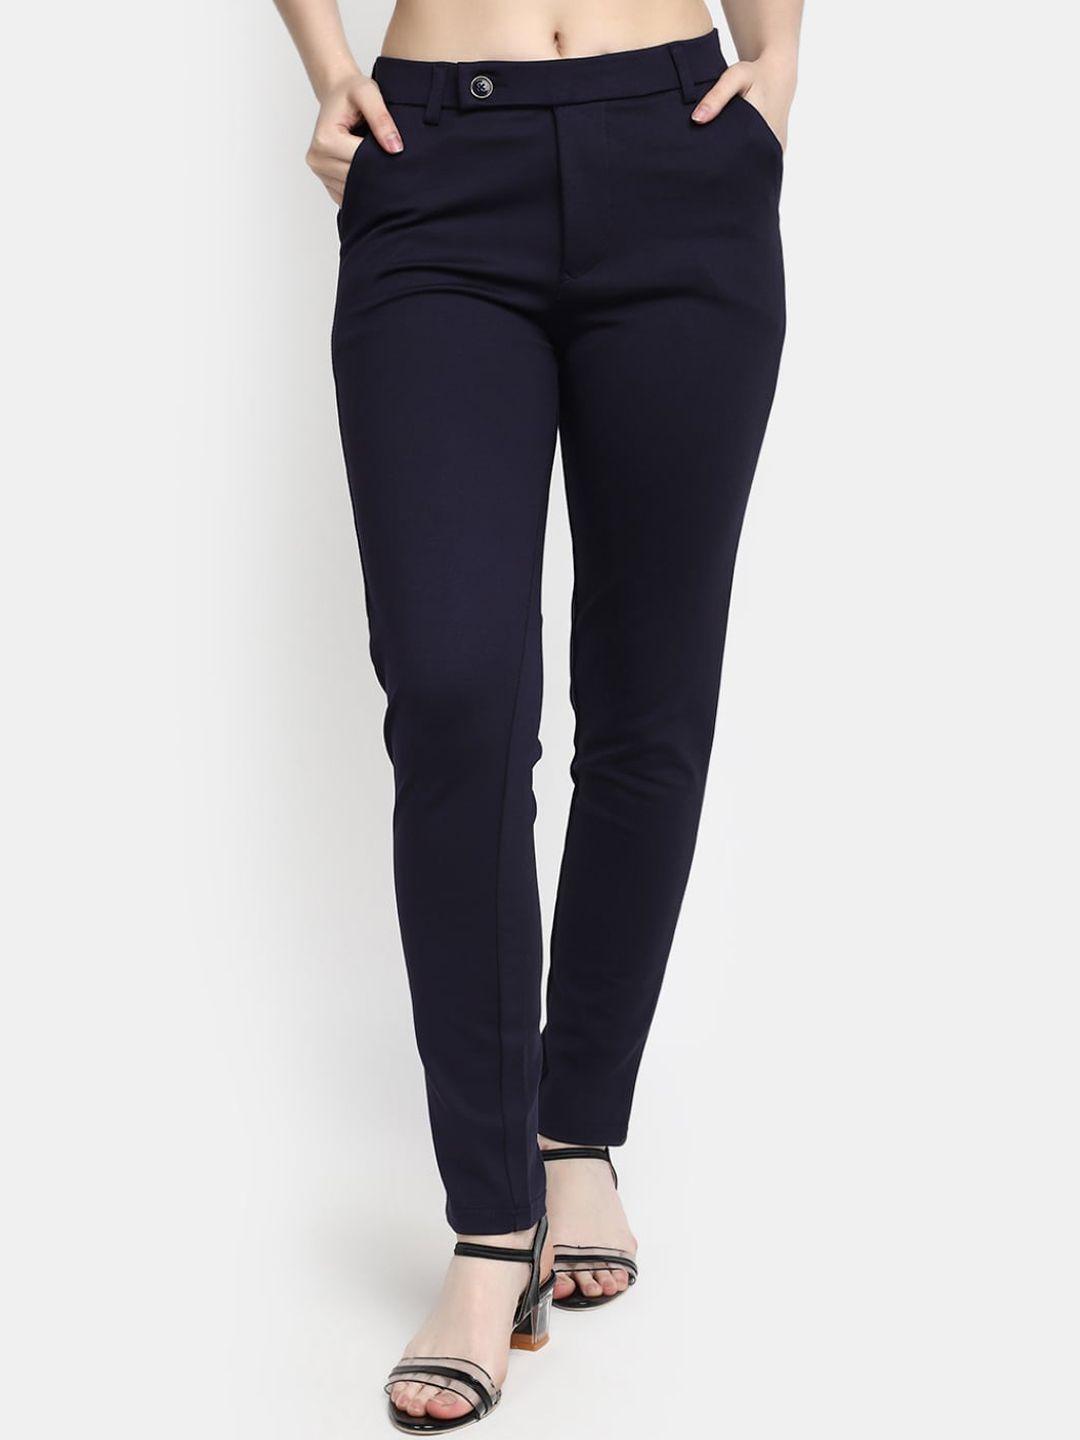 v-mart women mid top plain cotton formal trousers